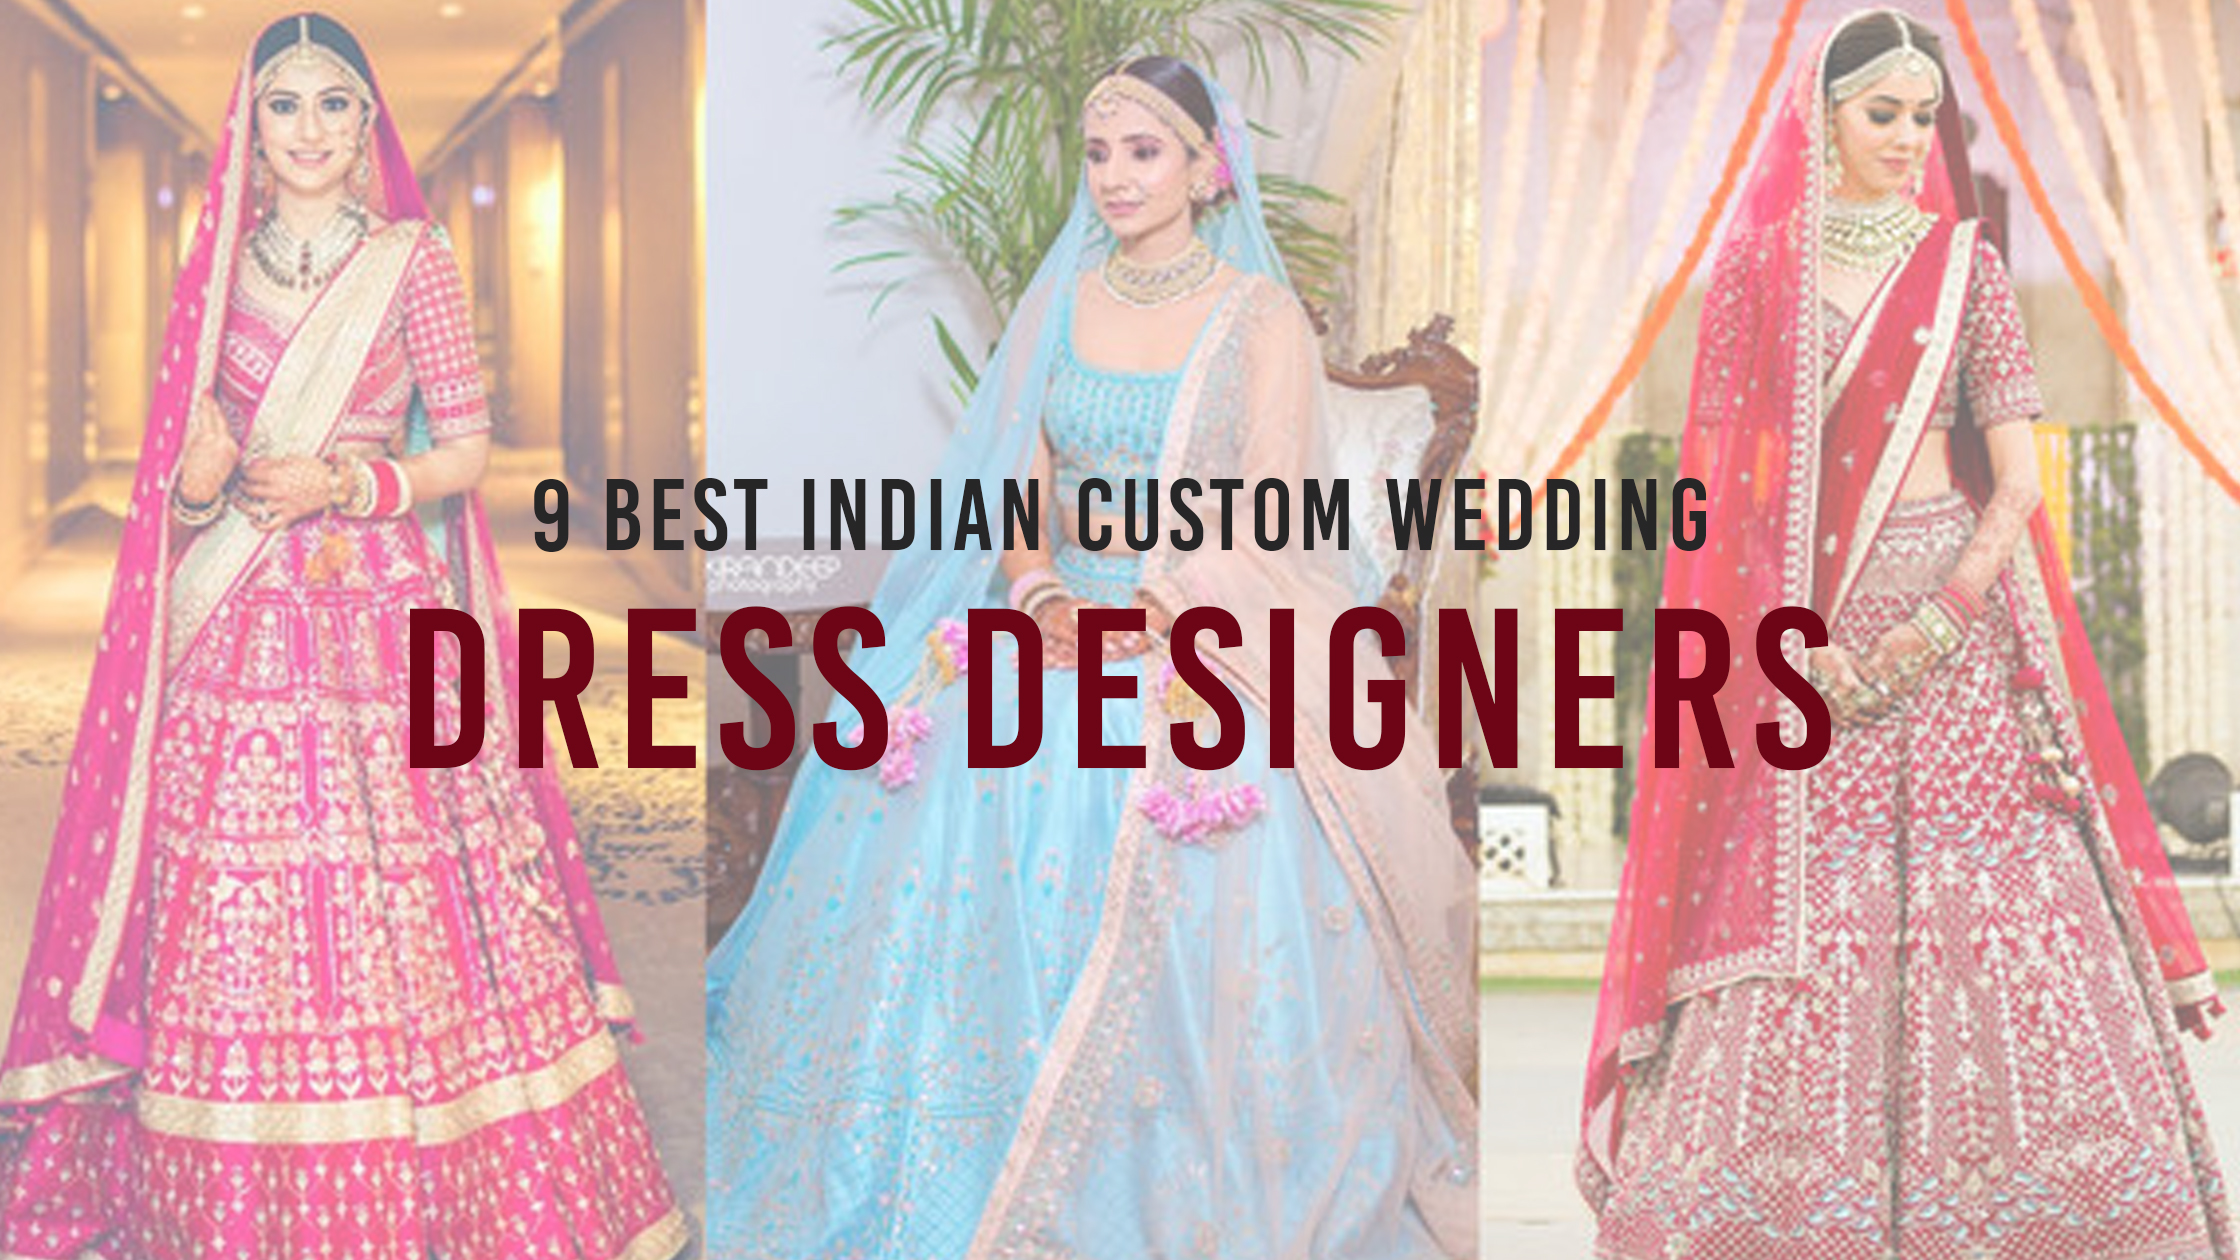 Indian custom wedding dress designers